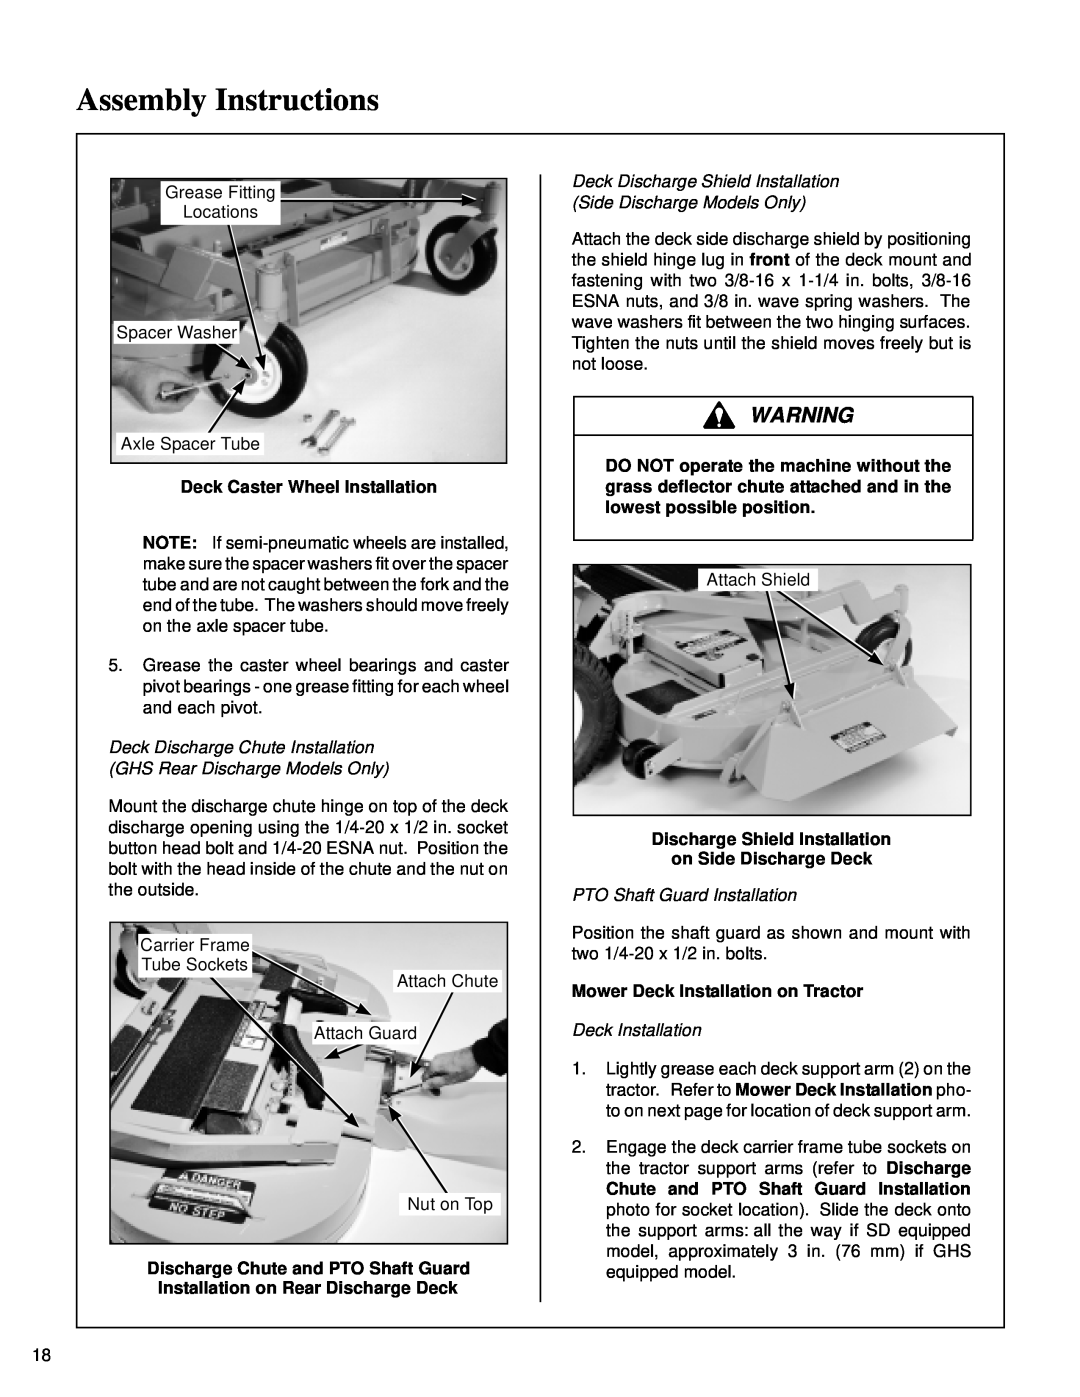 Walker MT Assembly Instructions, Deck Caster Wheel Installation, Discharge Shield Installation on Side Discharge Deck 